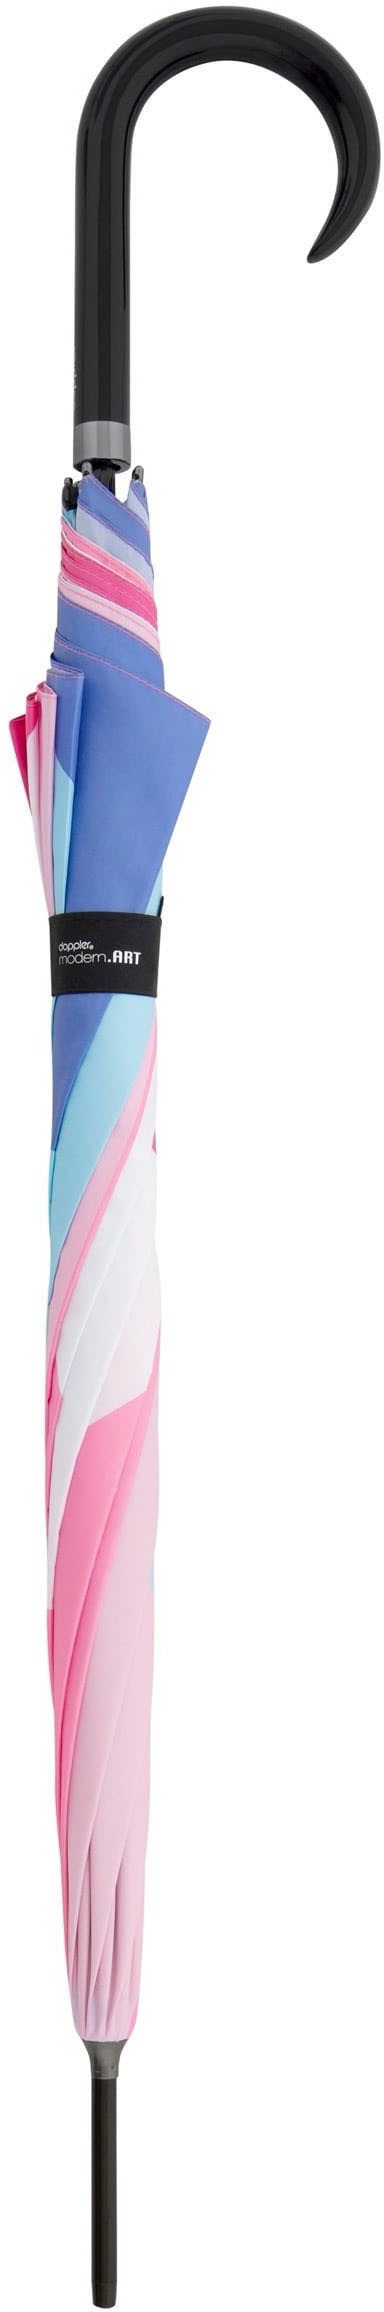 BAUR Lang AC cool doppler® »modern.ART pastel« online bestellen Stockregenschirm |